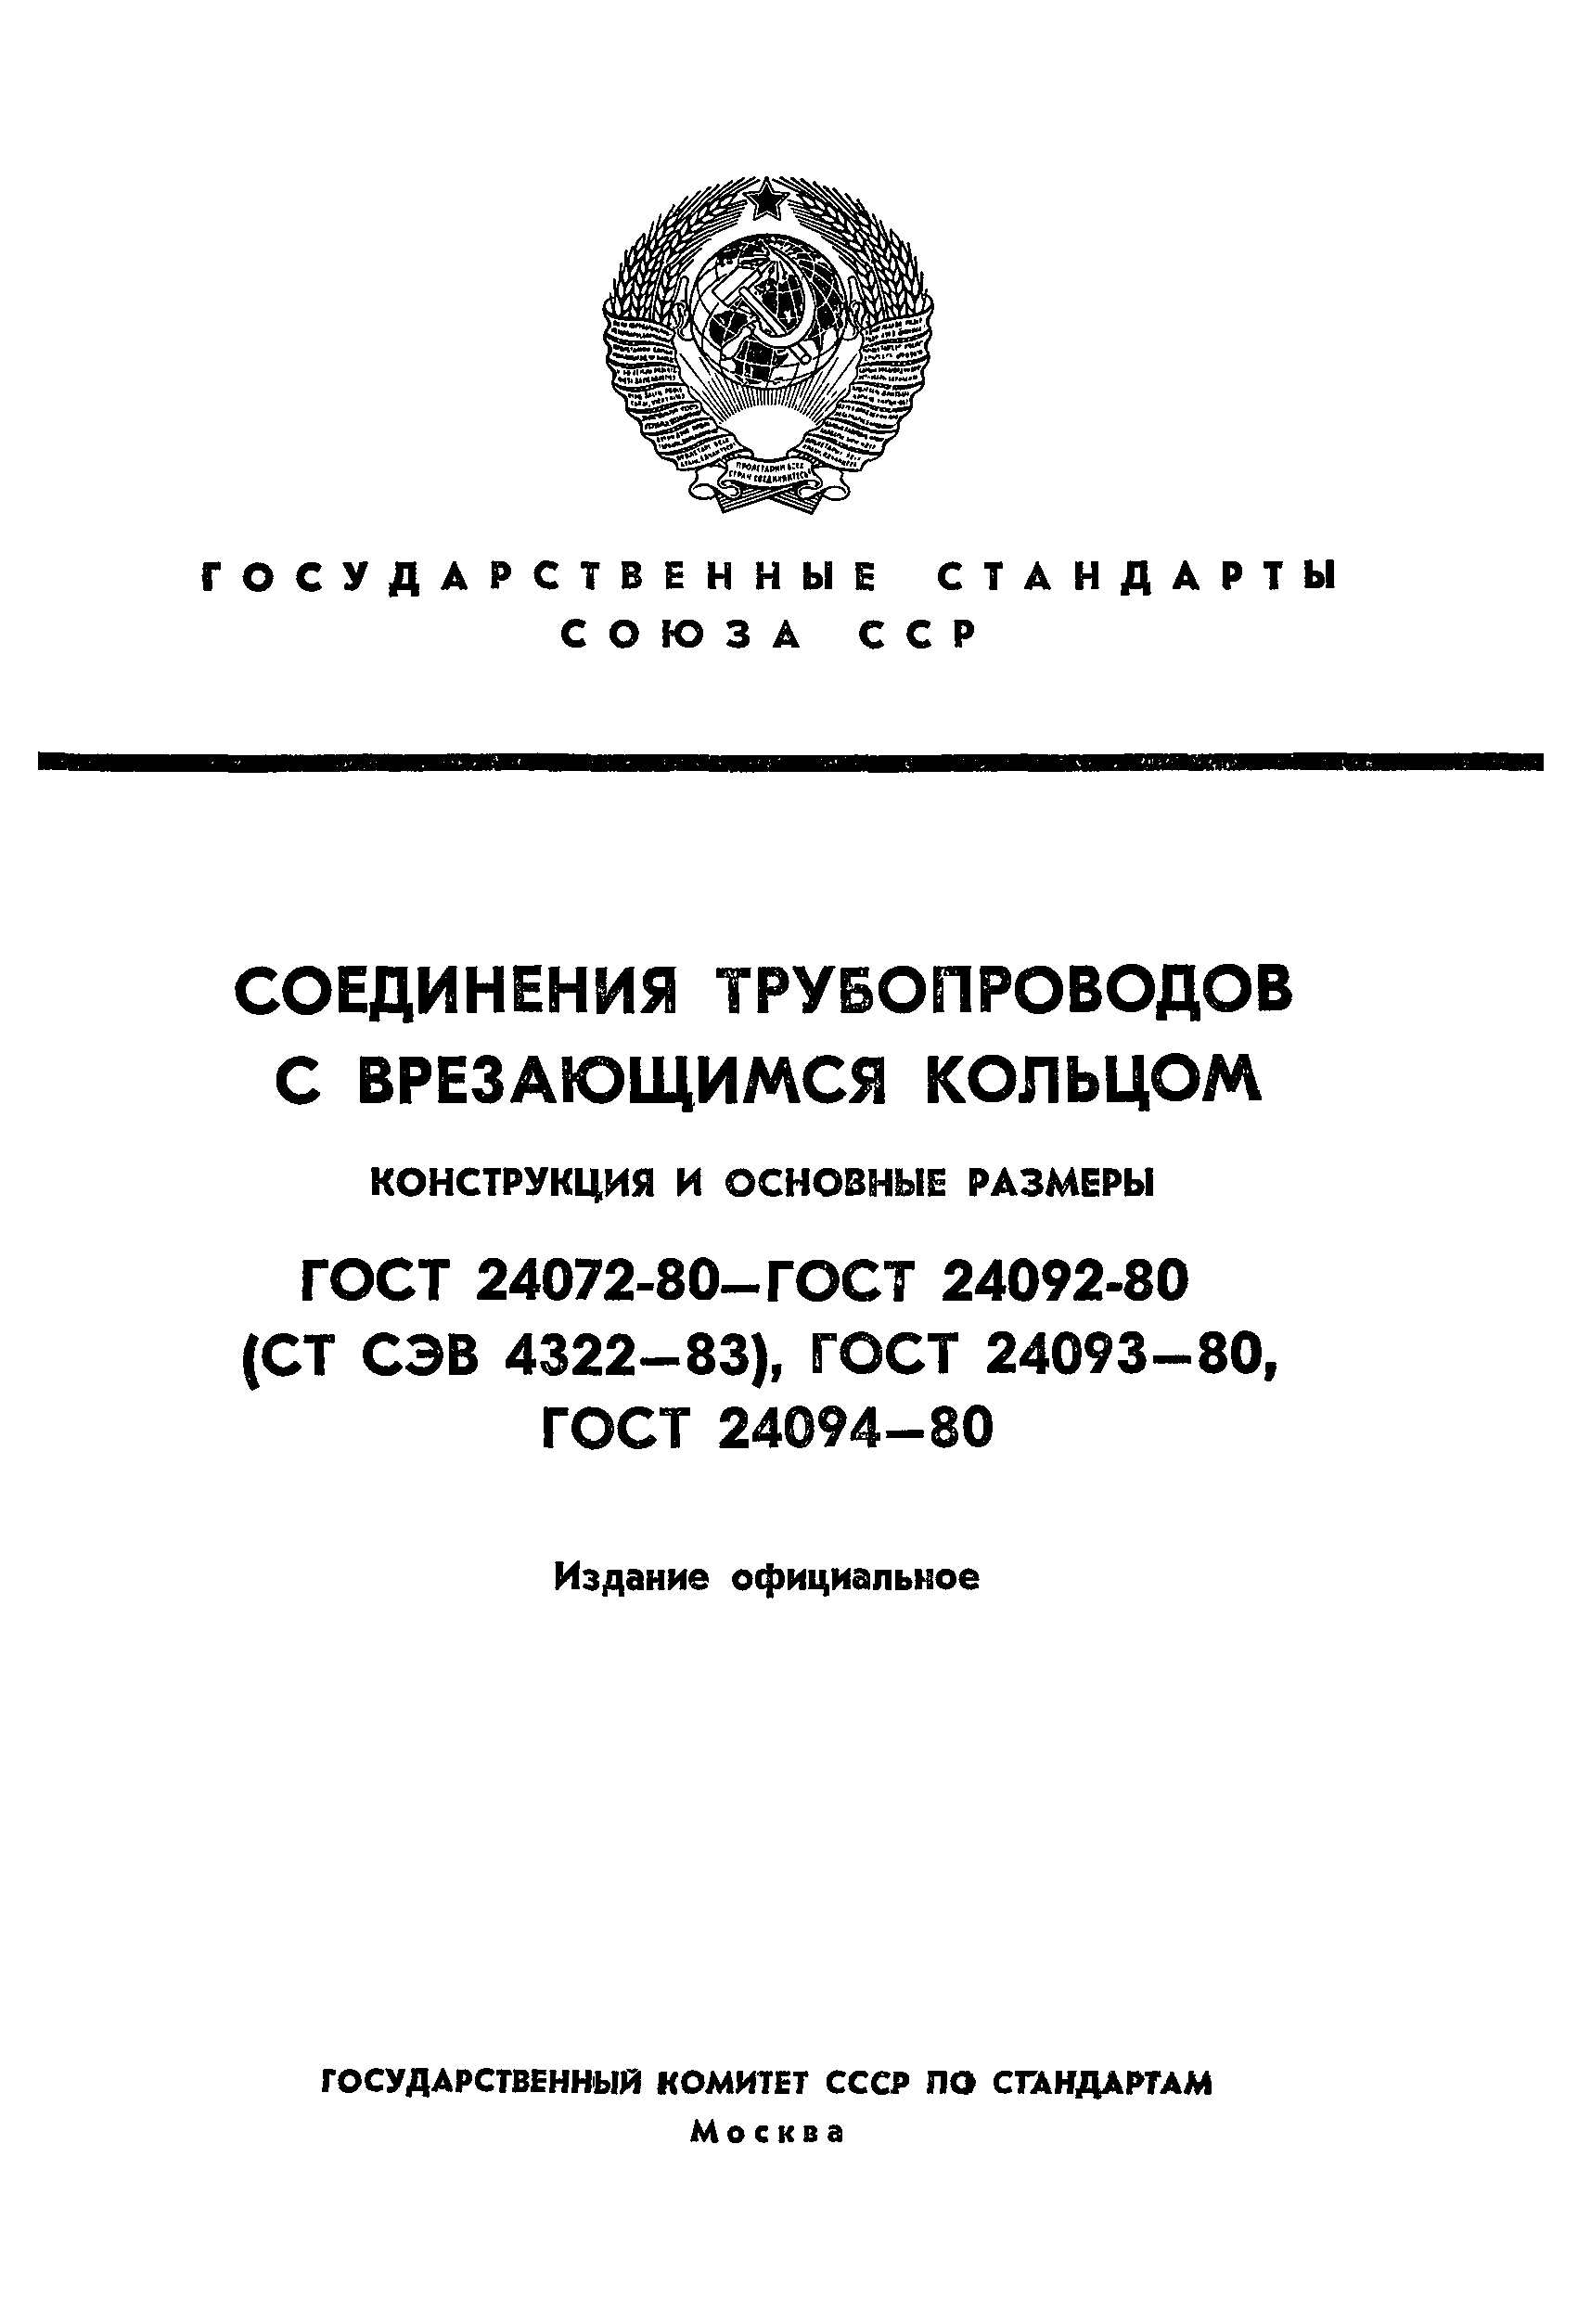 ГОСТ 24088-80